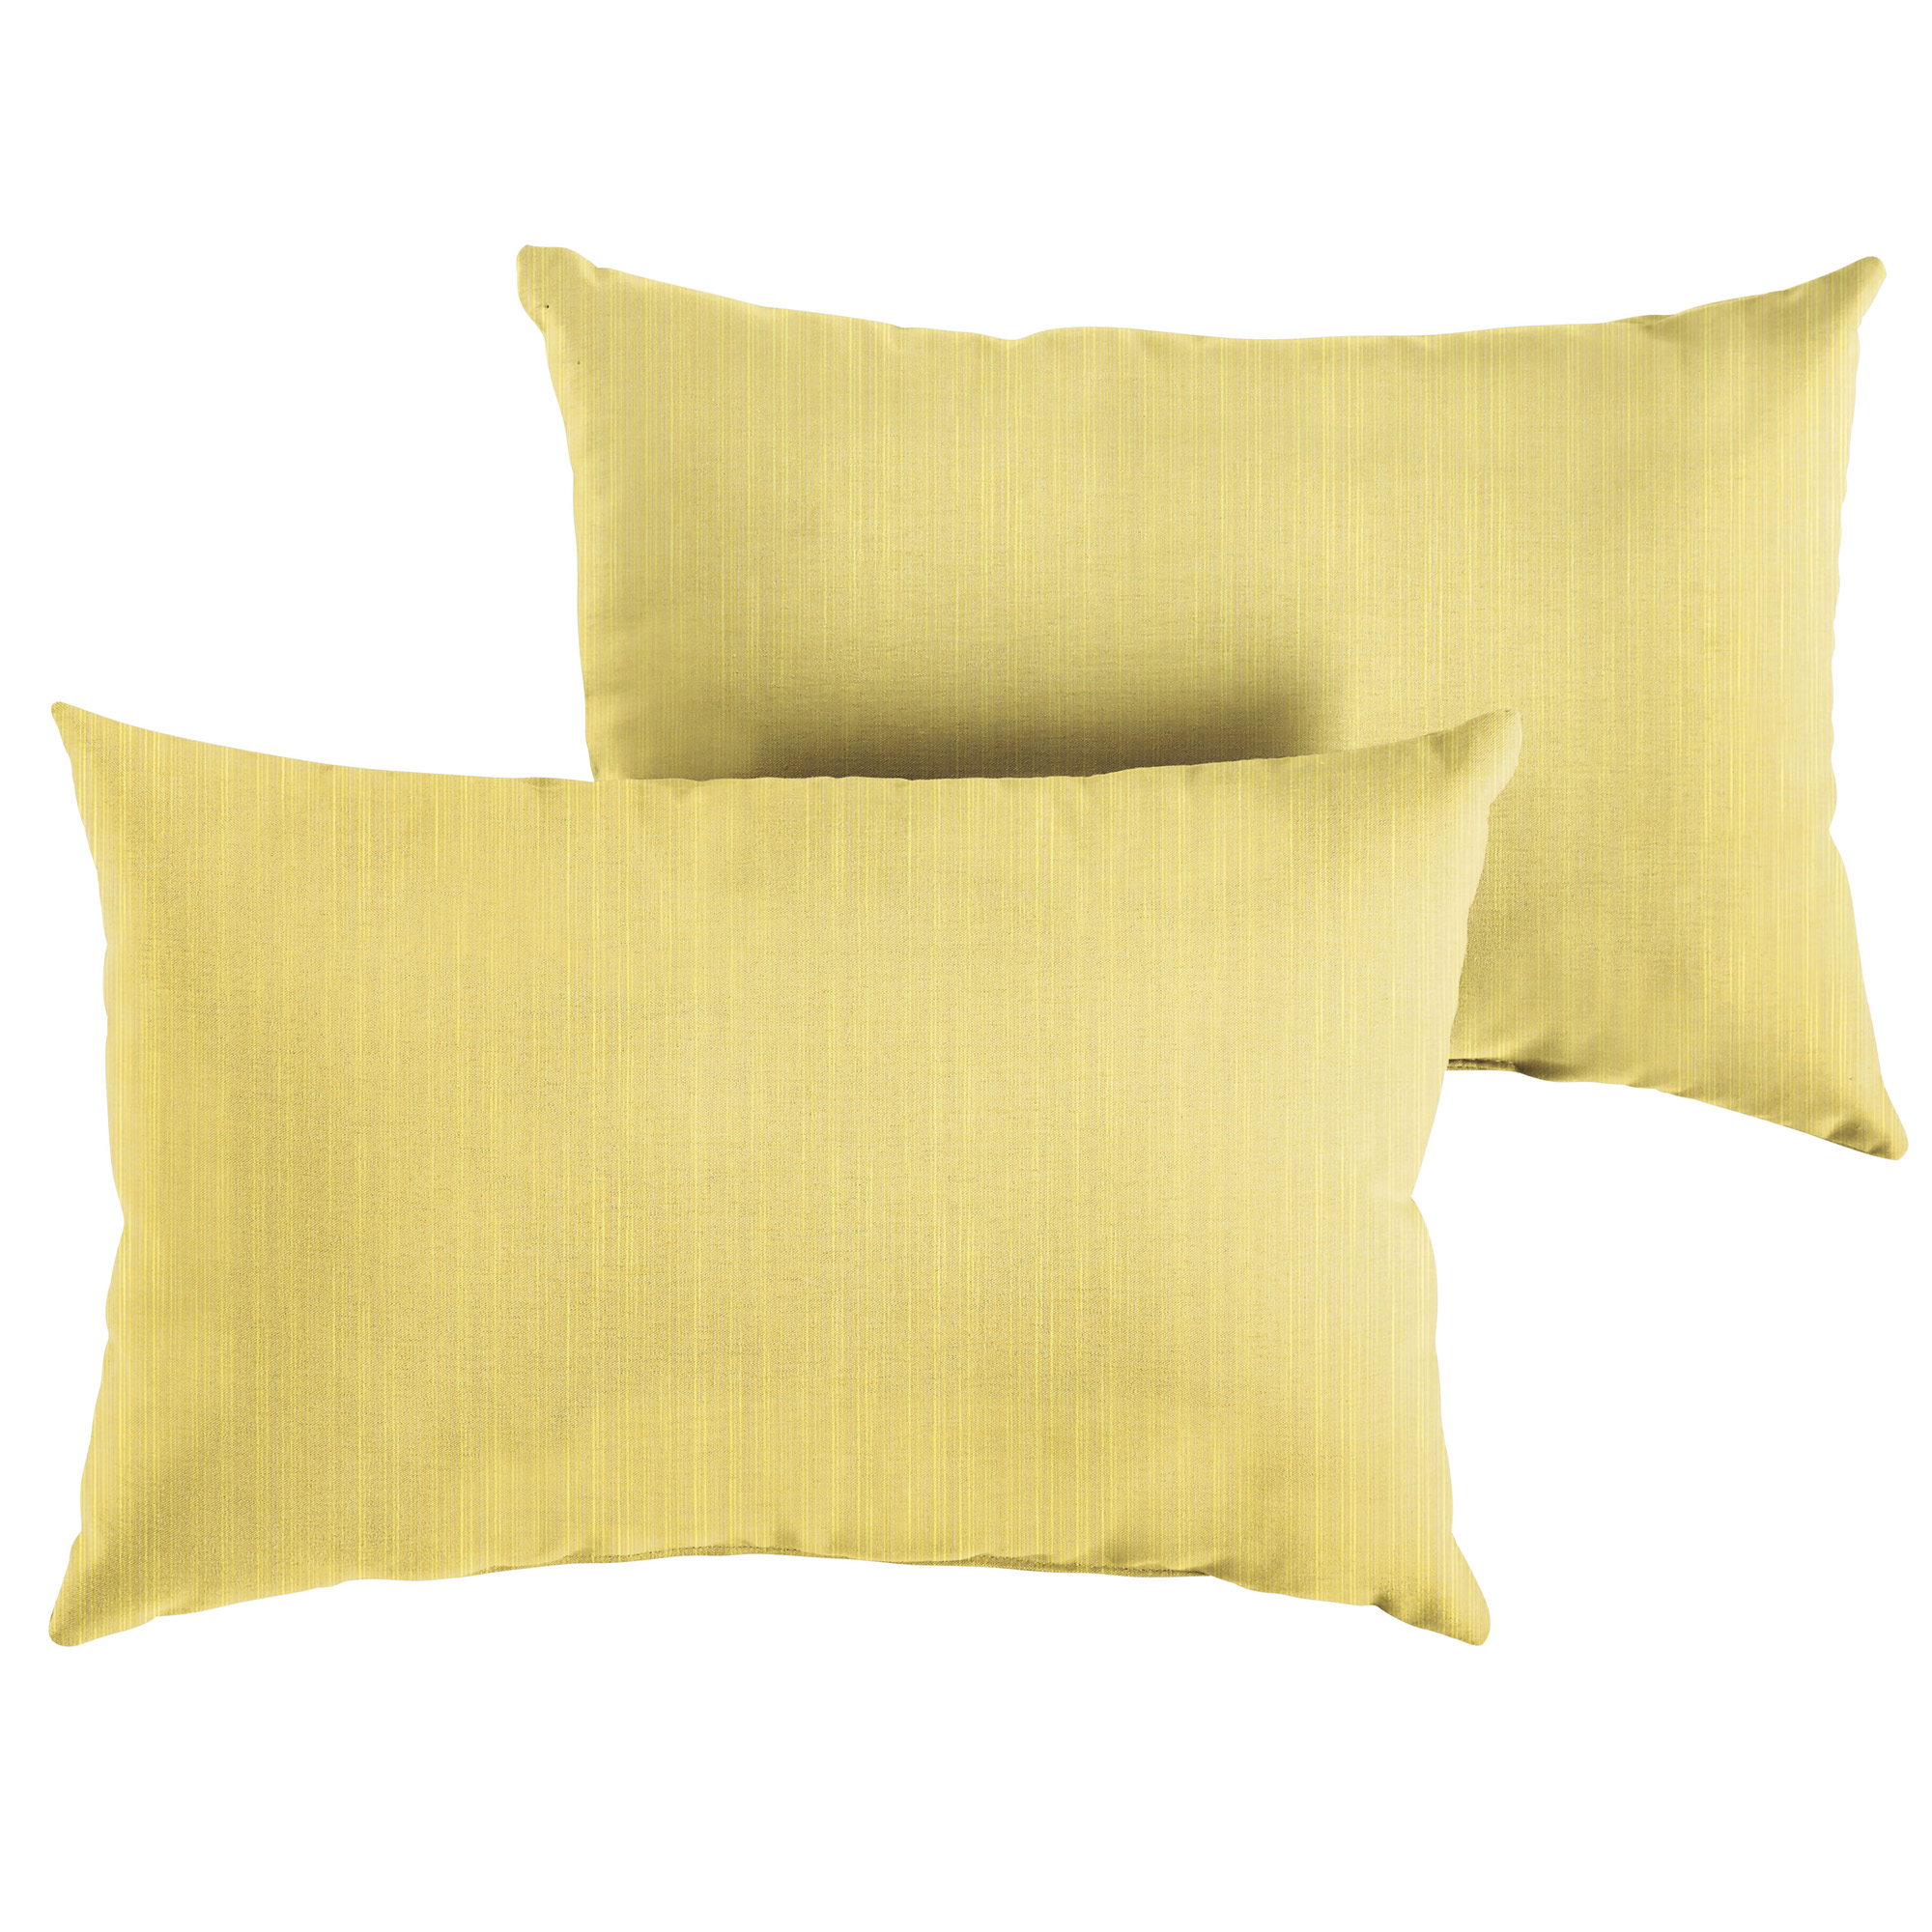 Outdoor Living and Style Set of 2 13" x 20" Cornsilk Yellow Textured Solid Subrella Indoor and Outdoor Lumbar Pillows